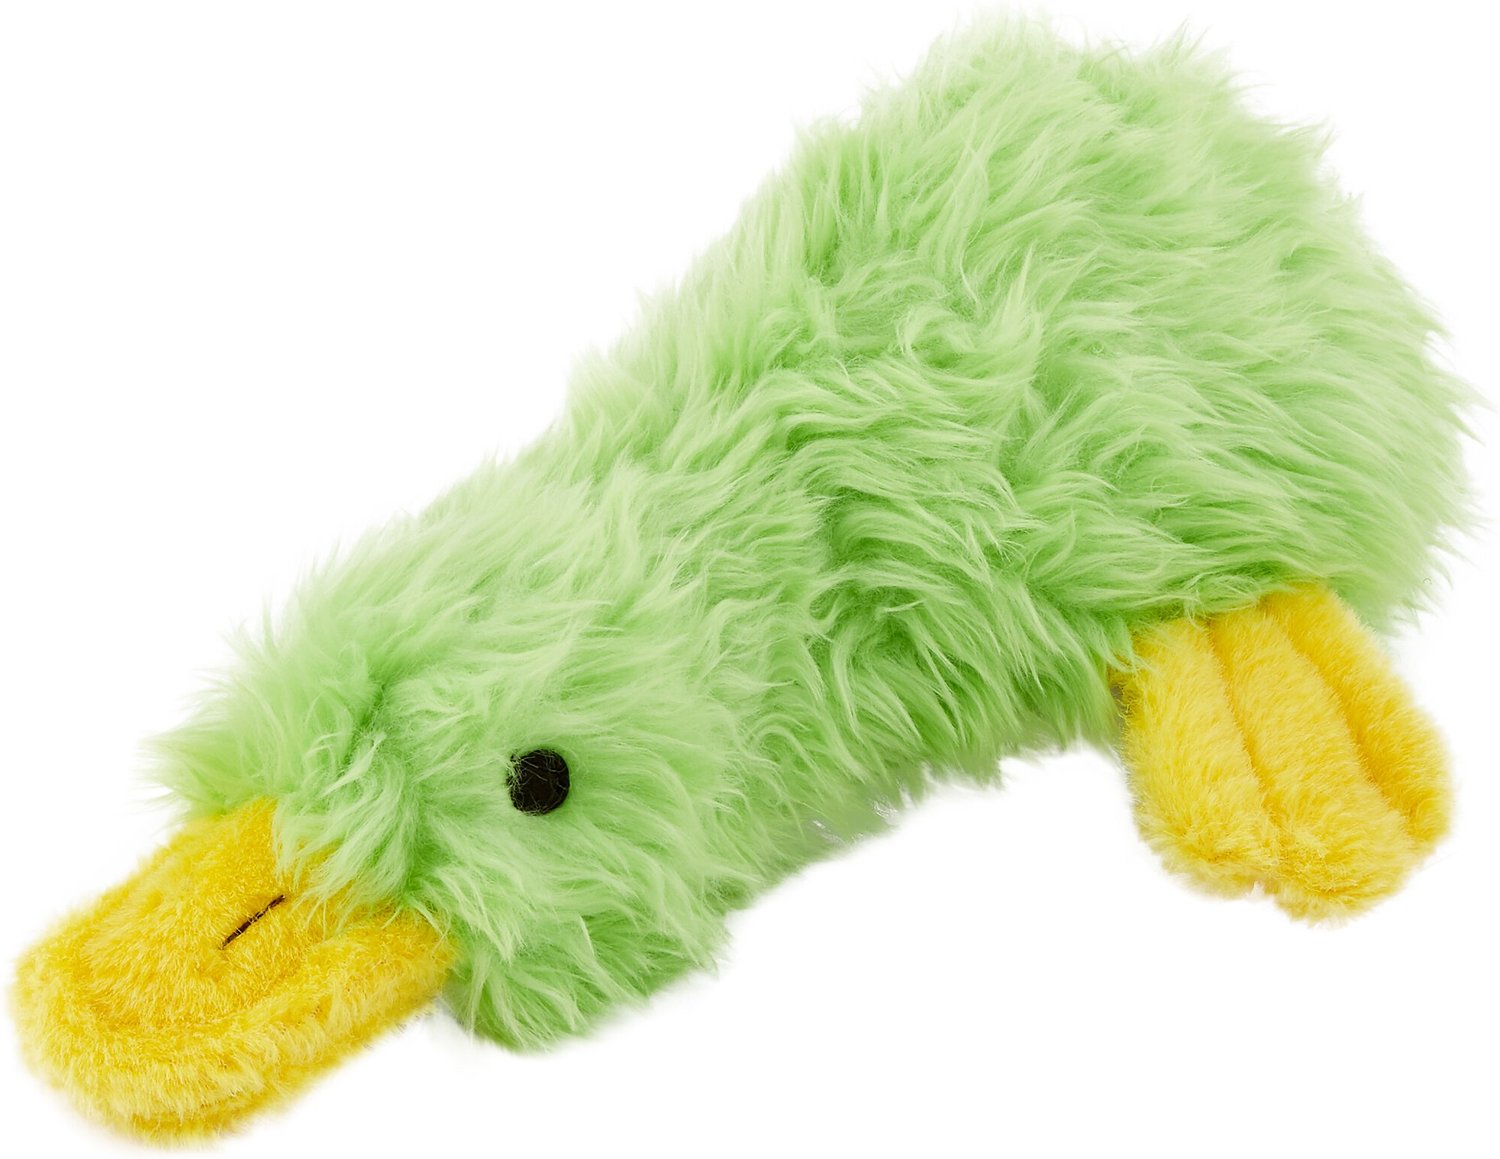 green dog toy